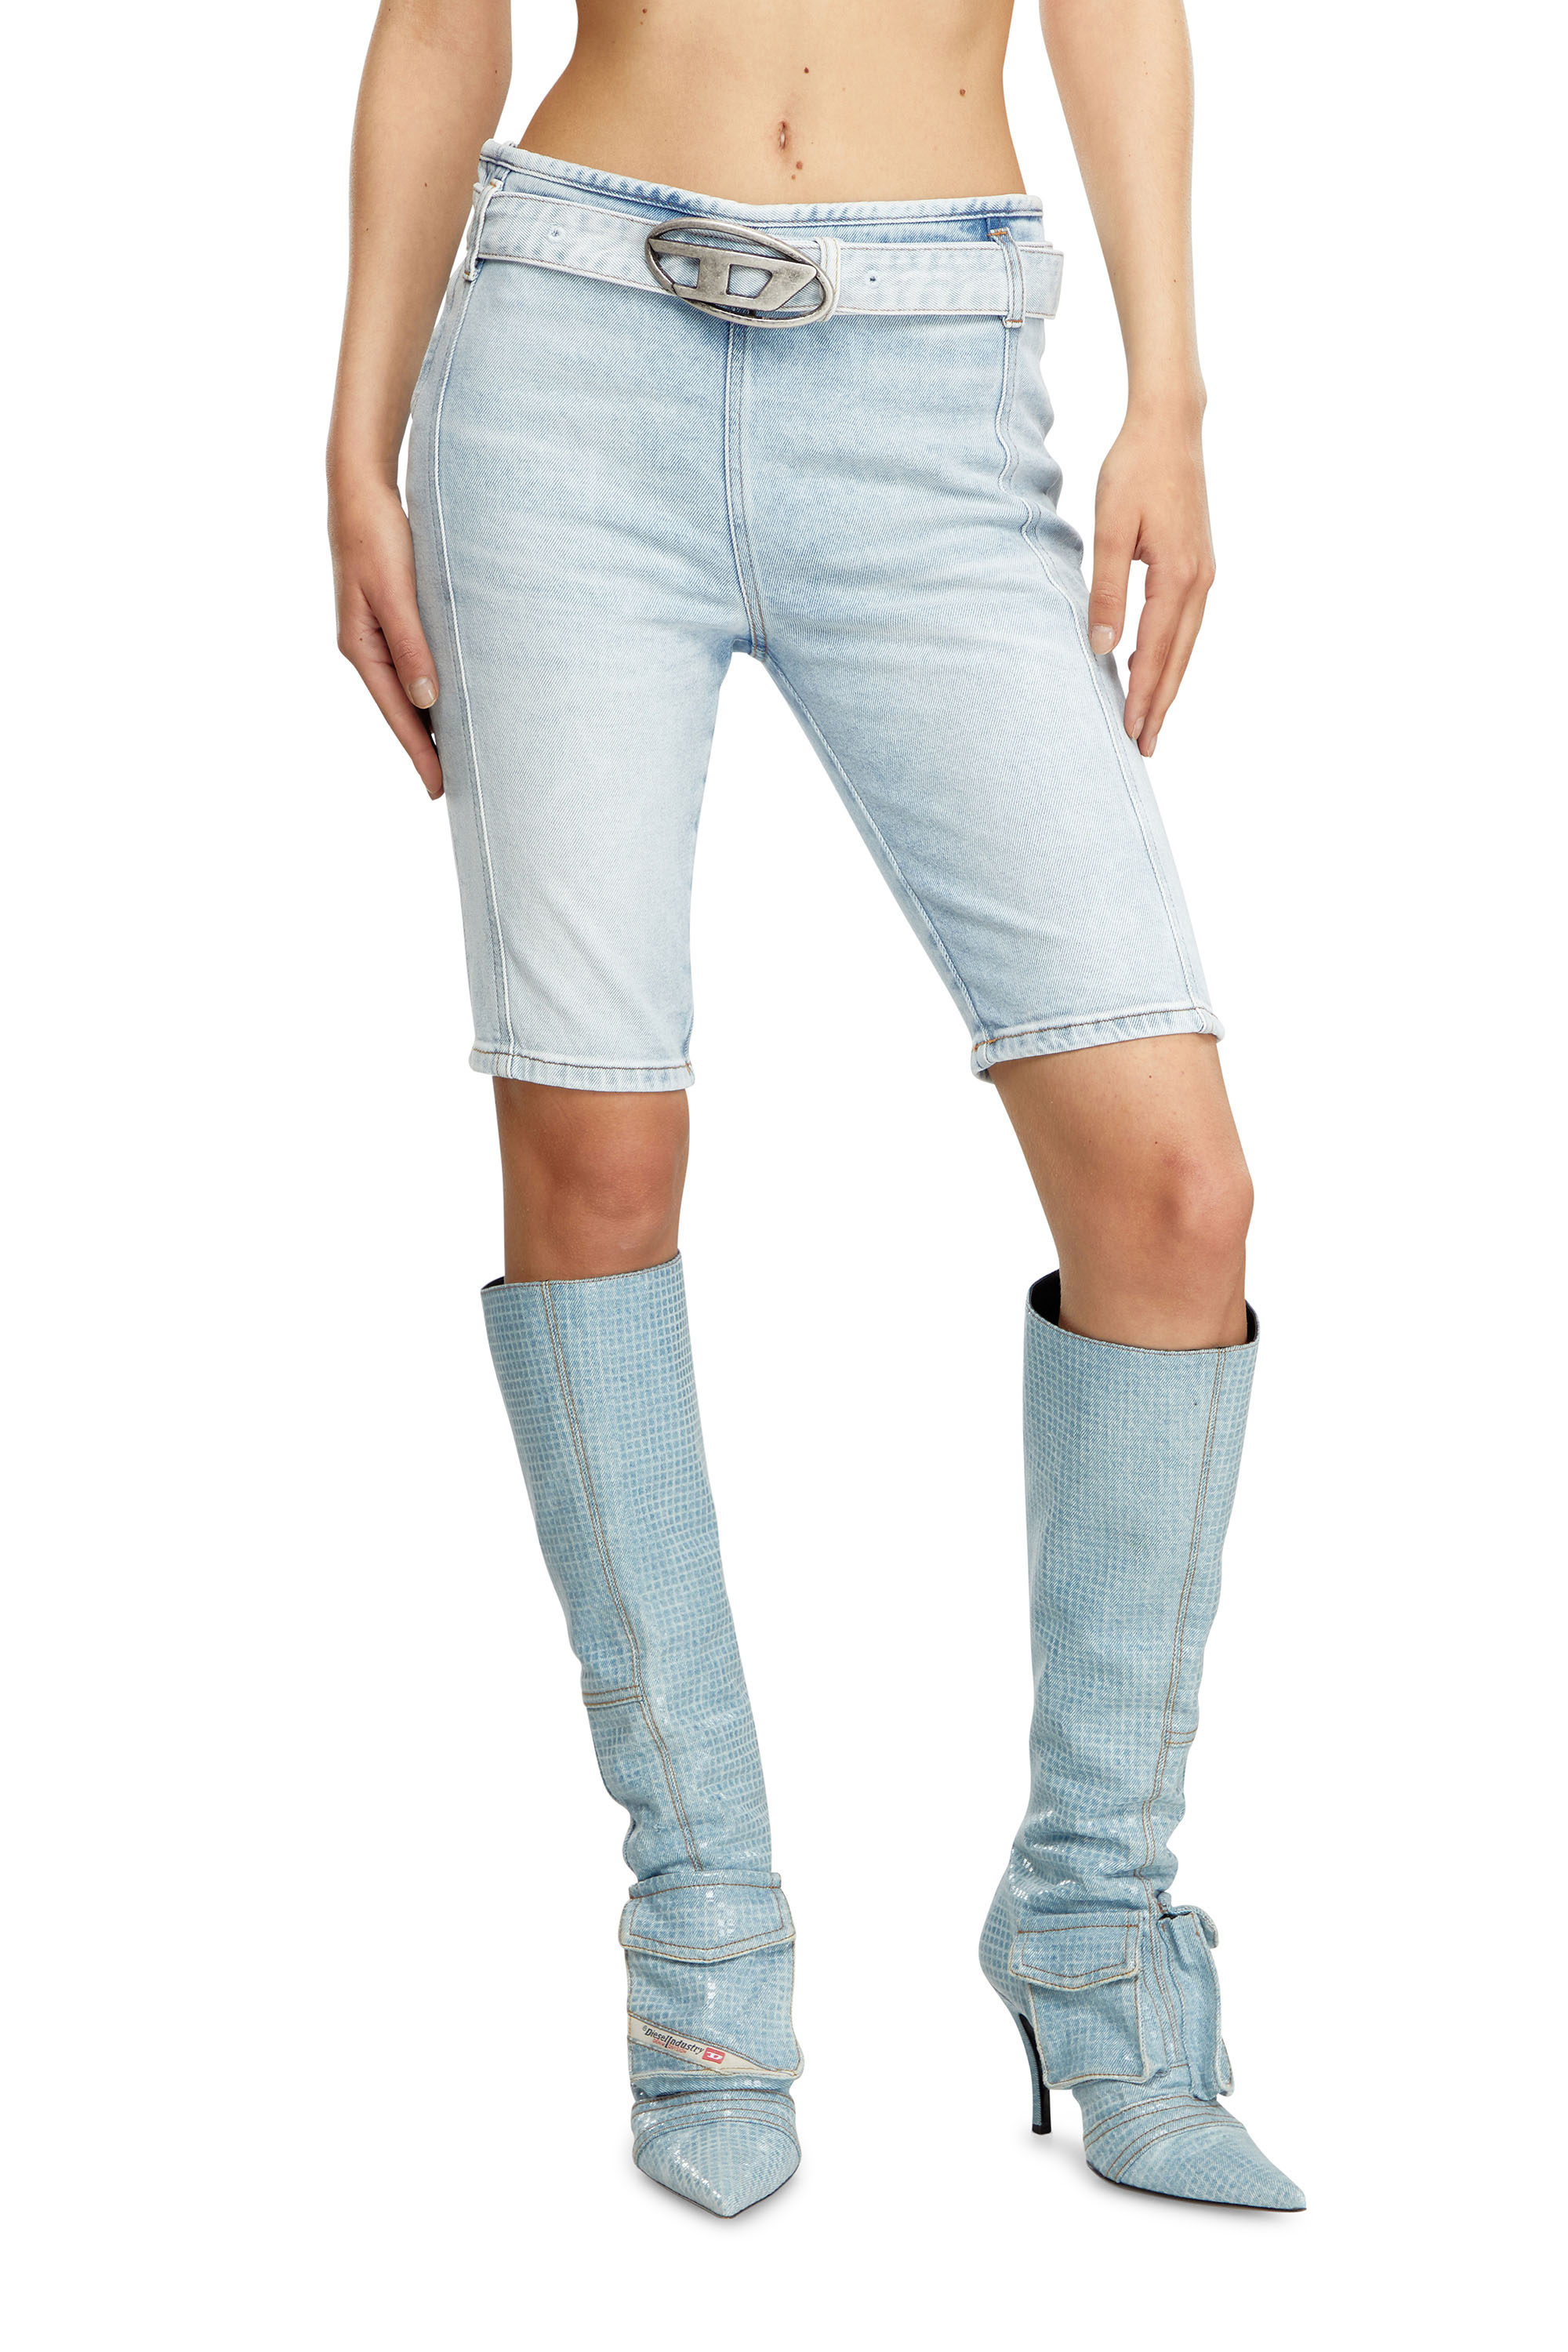 Women's Shorts: in Jeans, in Cotton, Sporty